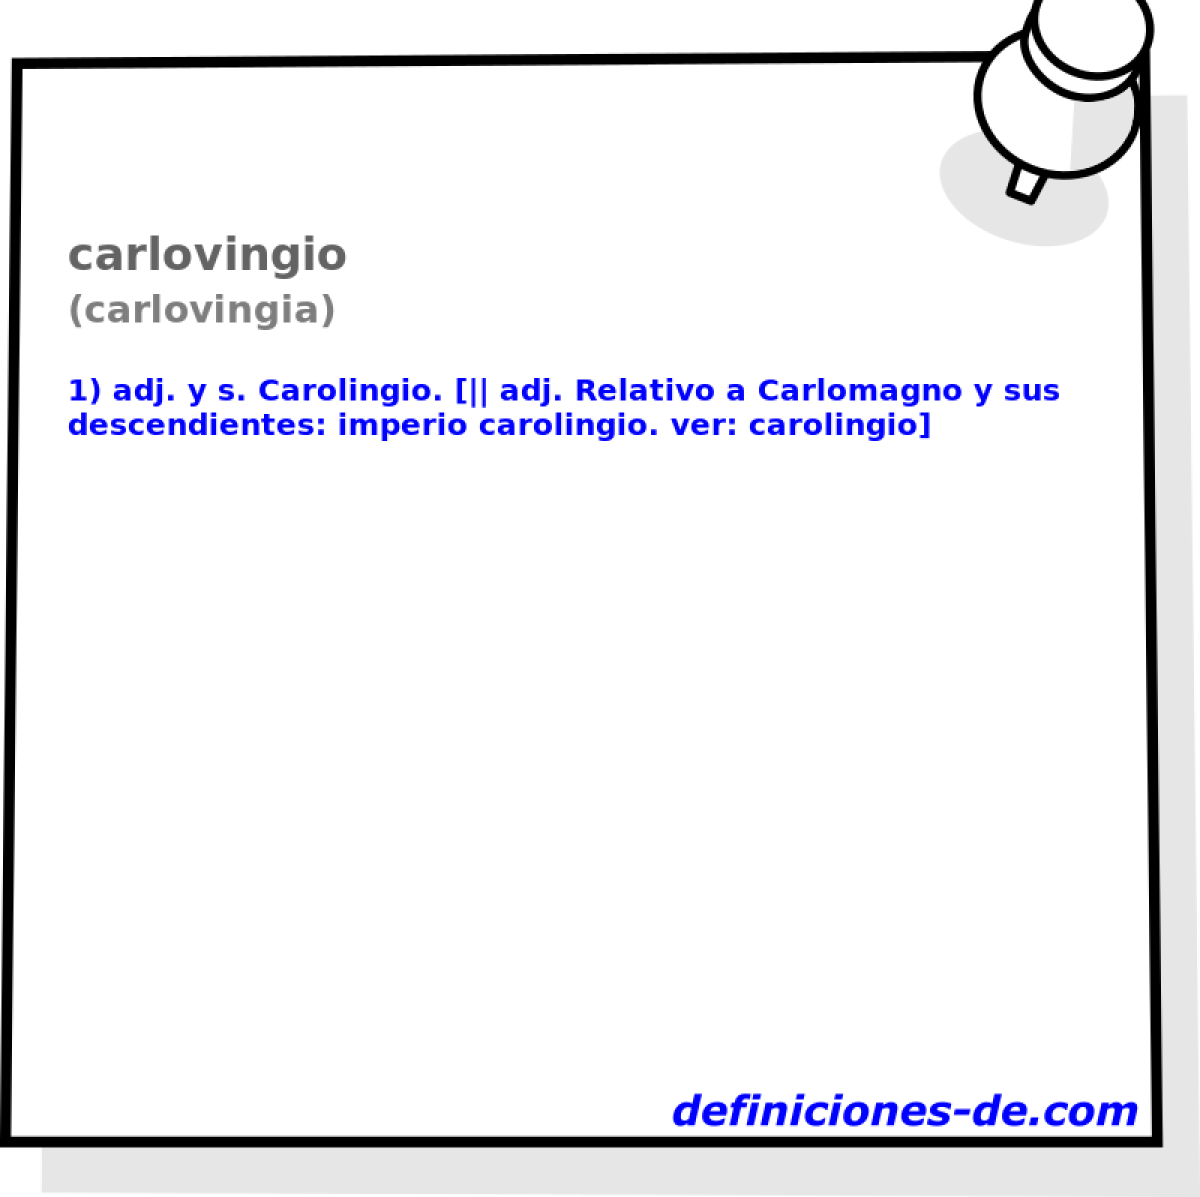 carlovingio (carlovingia)